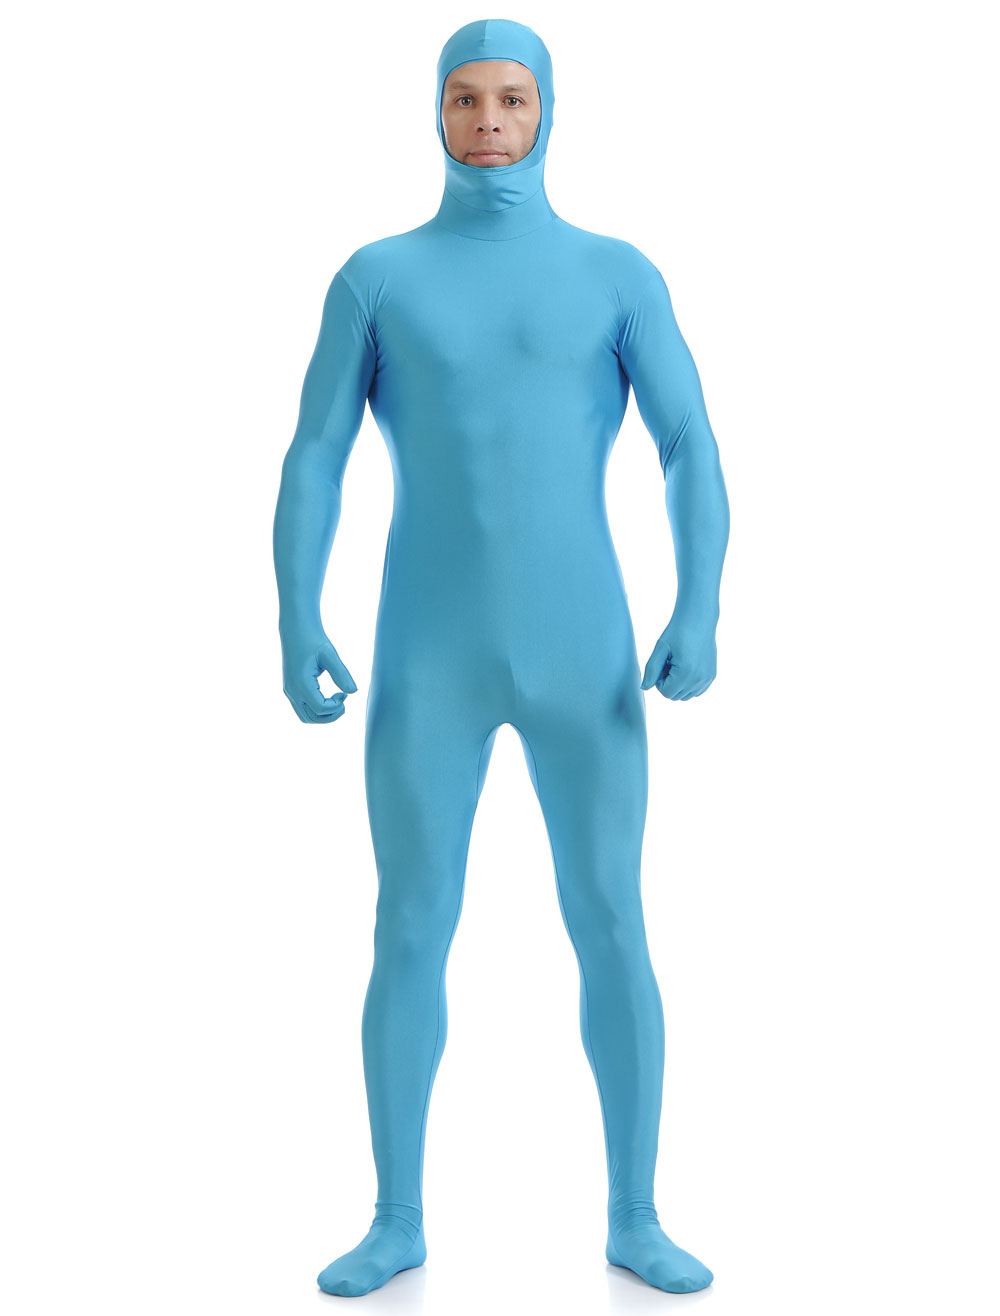 X-LARGE BLUE SKIN SUIT COSTUME Adult Men Spandex Bodysuit Full Cover Zentai NEW 